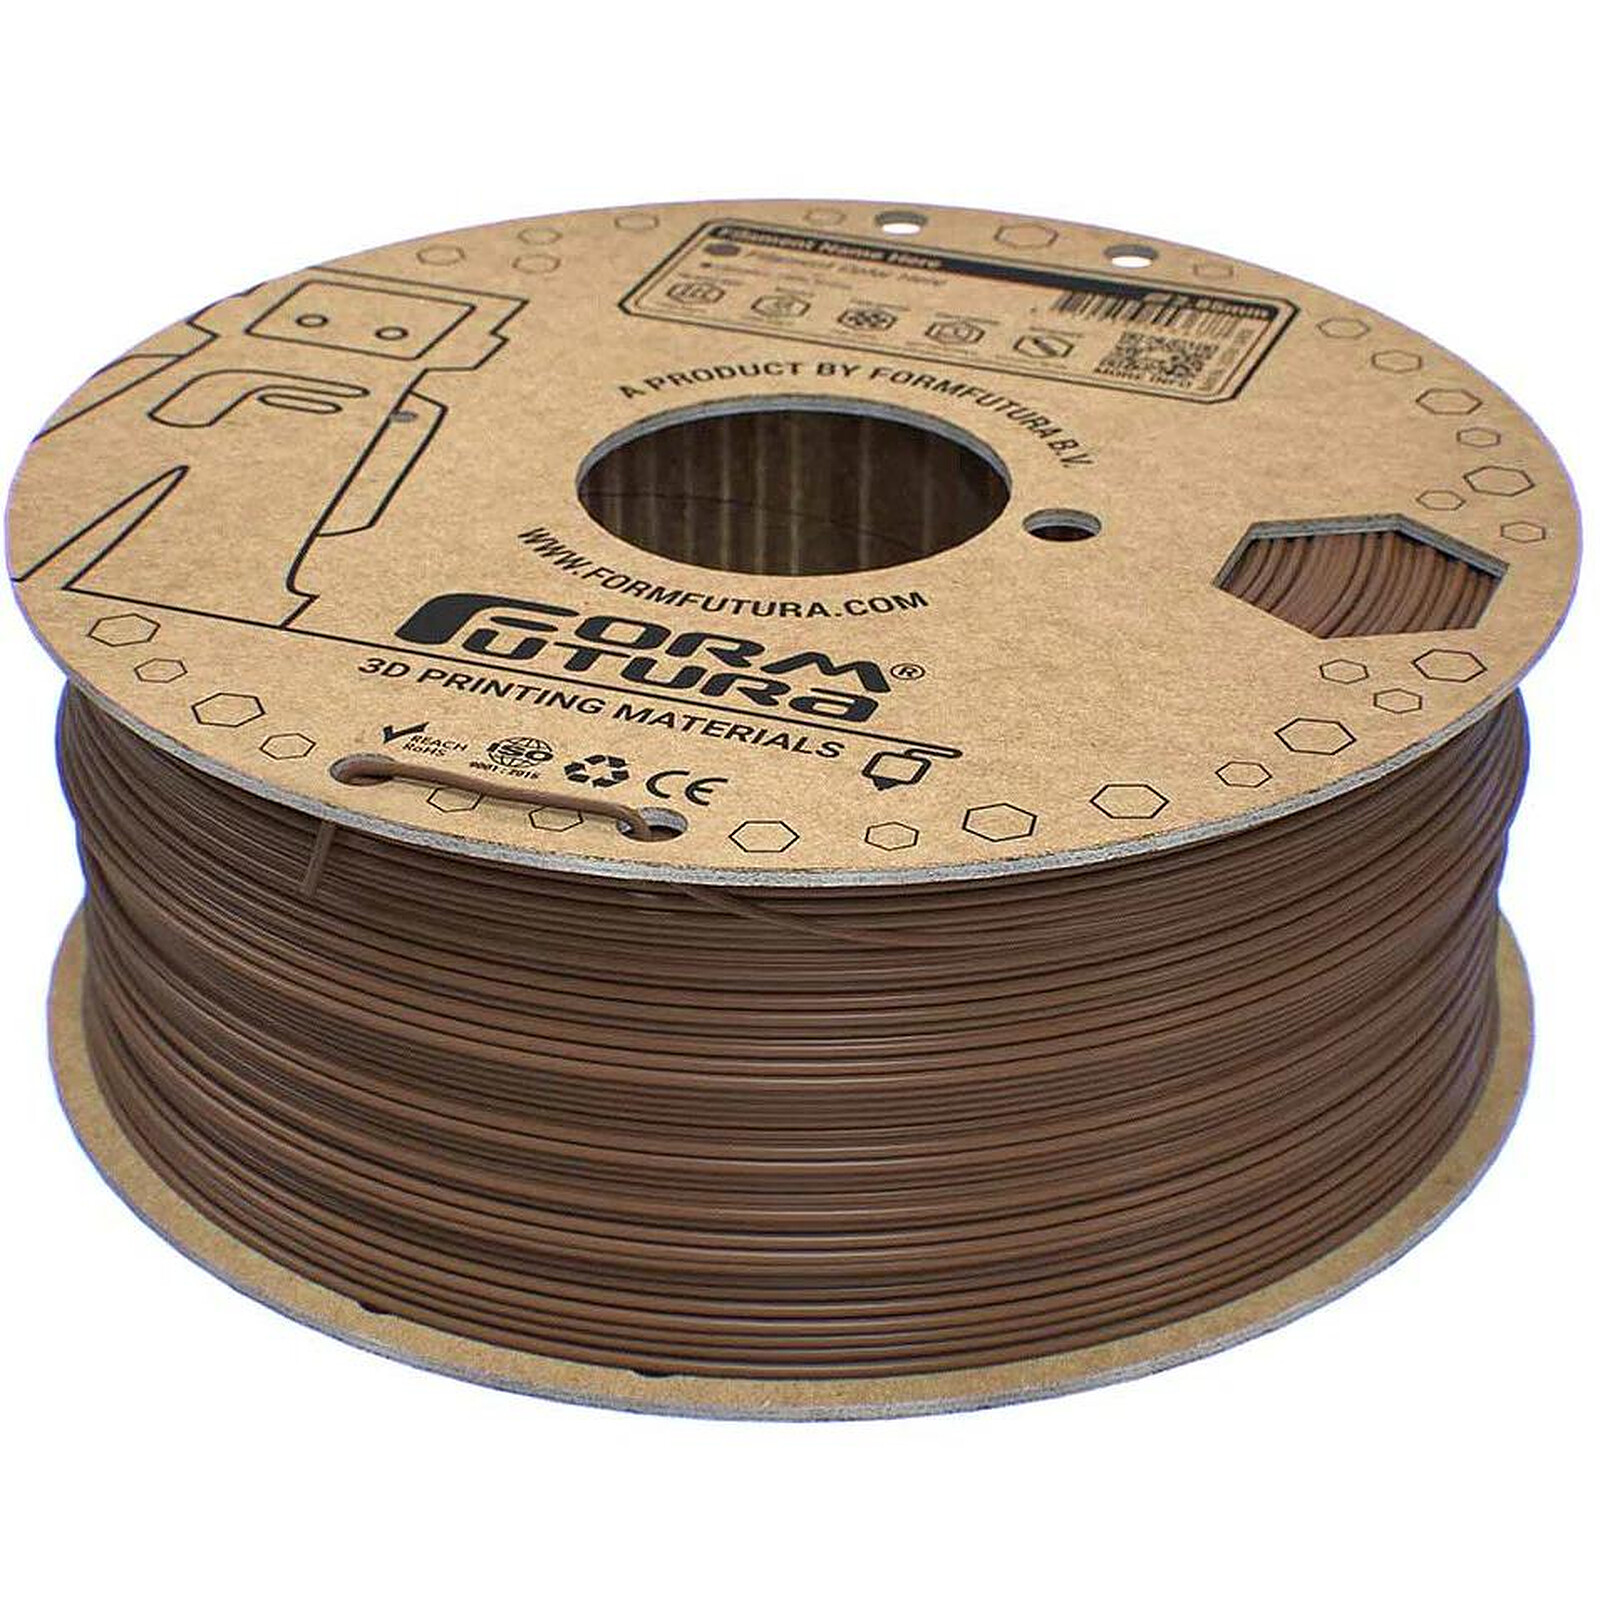 Bobine Fil PLA 1.75mm Marron Chocolat Spectrum - 1 KG